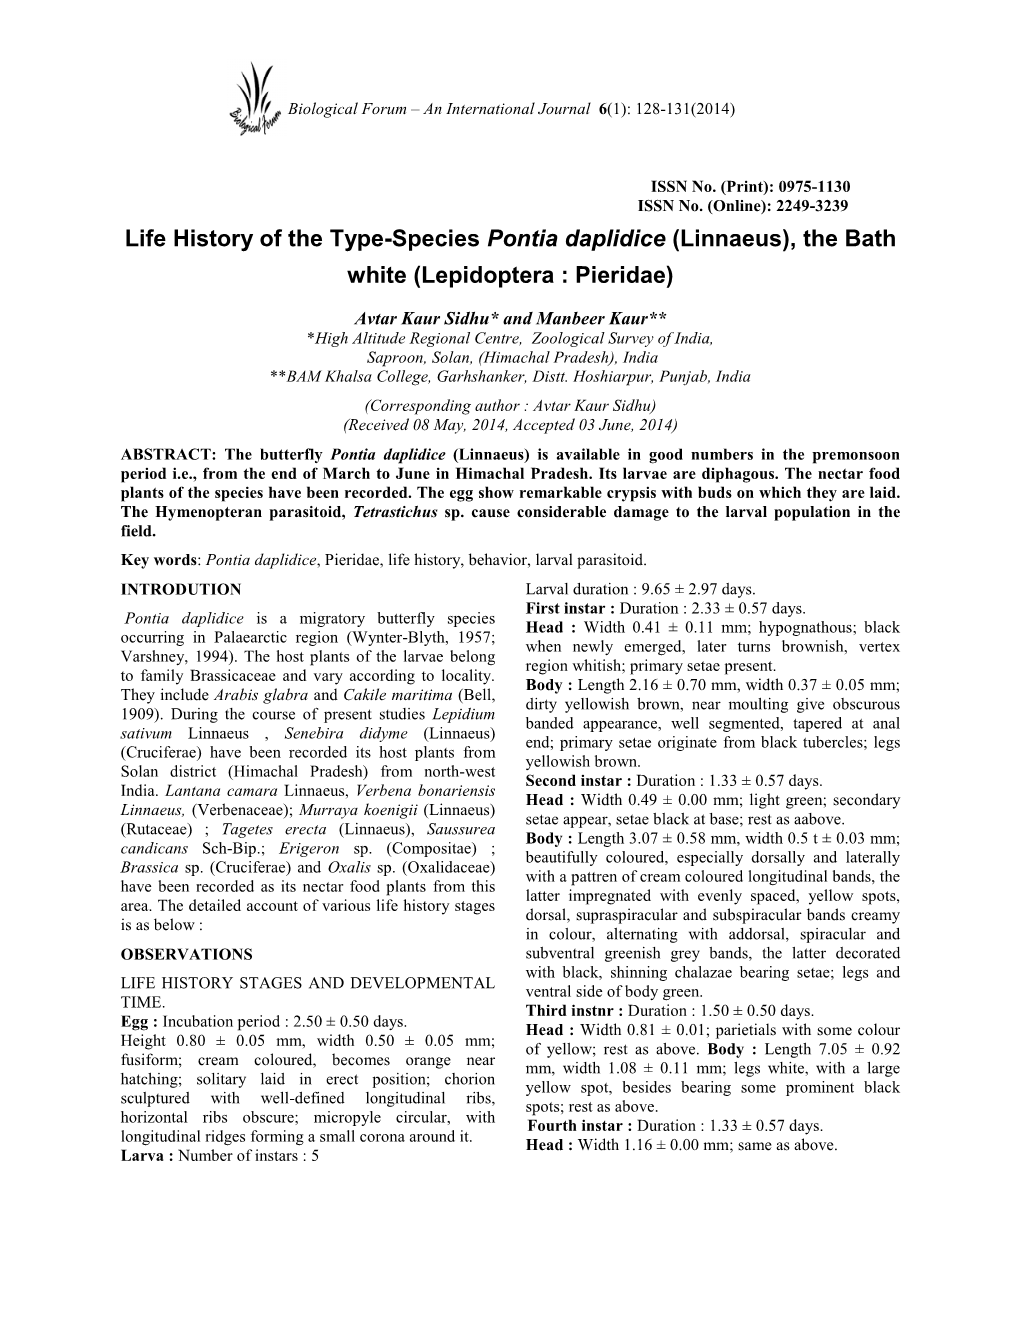 Life History of the Type-Species Pontia Daplidice (Linnaeus), The